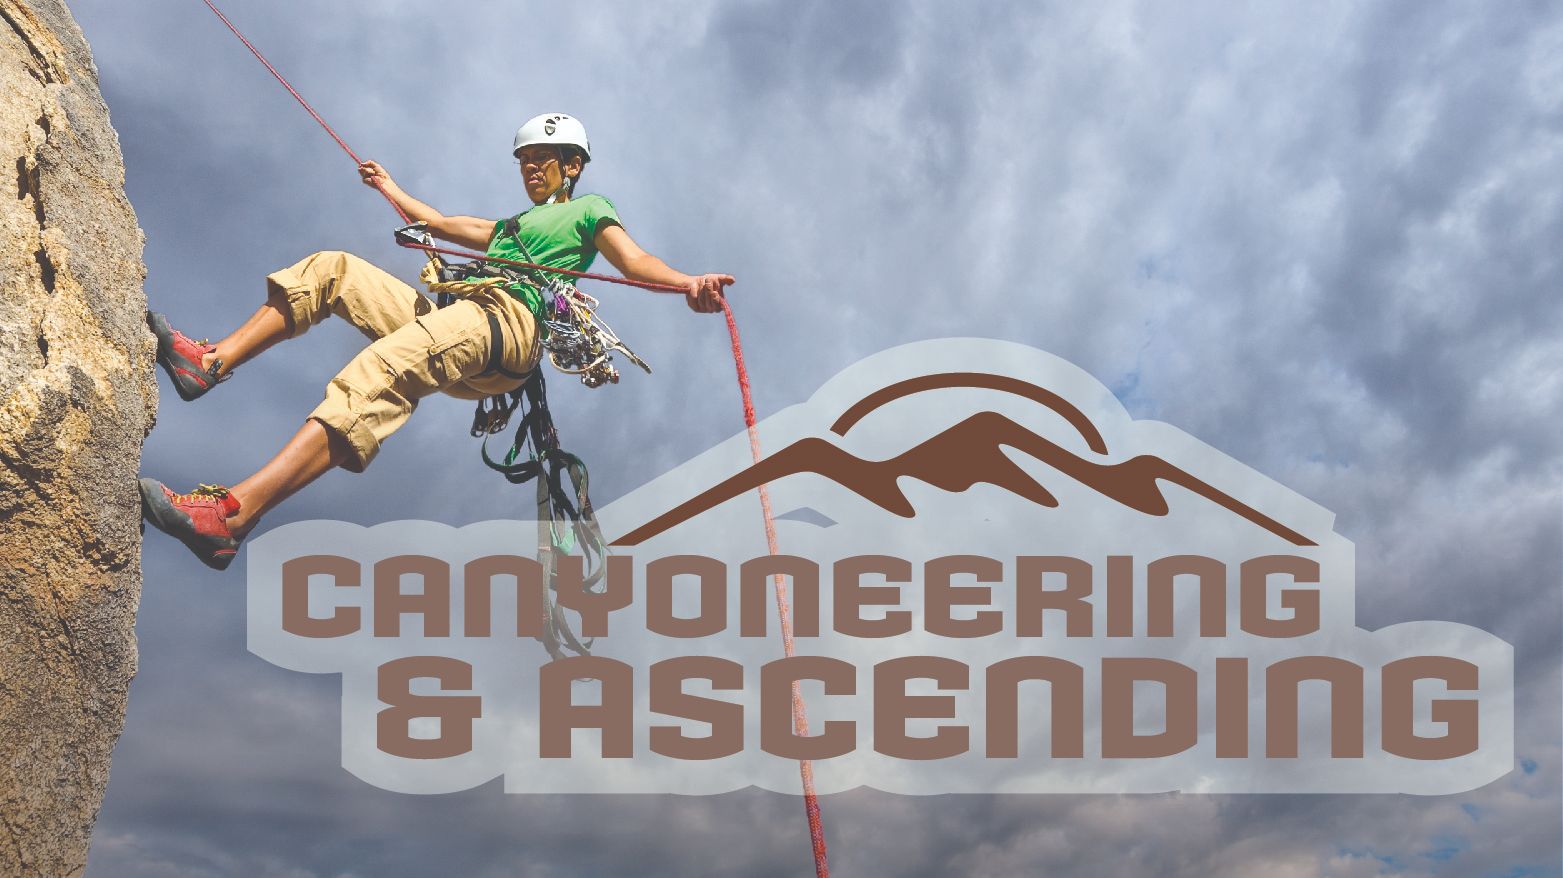 Canyoneering & Ascending